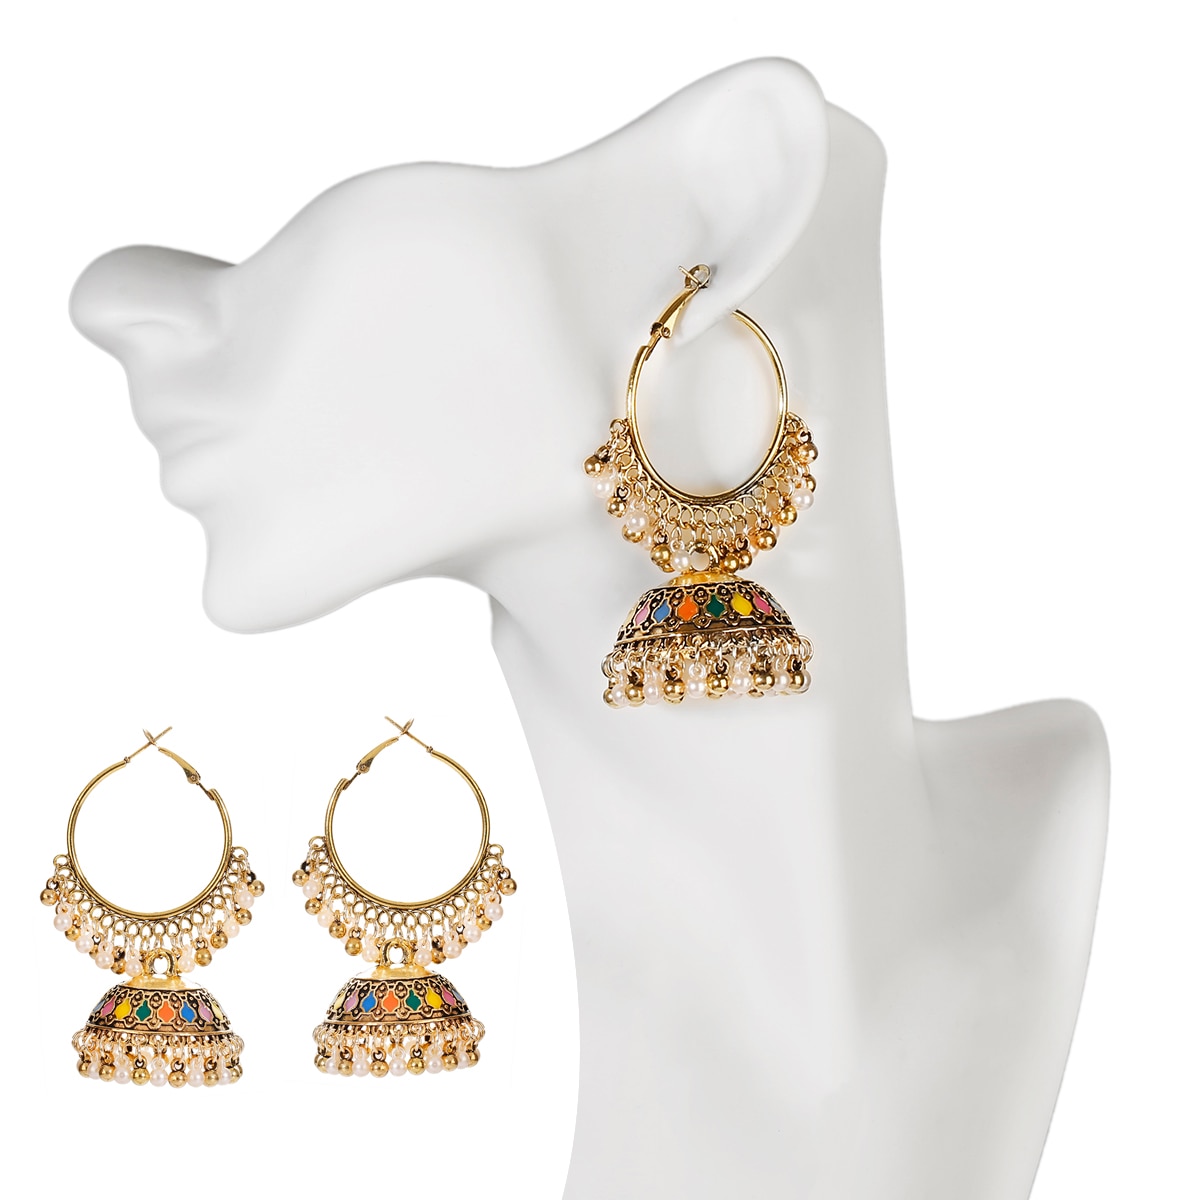 Pendientes-Gypsy-Ethnic-Round-Bells-Indian-Jewelry-Earrings-Vintage-Tribe-Jhumka-Earrings-Kolczyki-W-1005003814363276-7